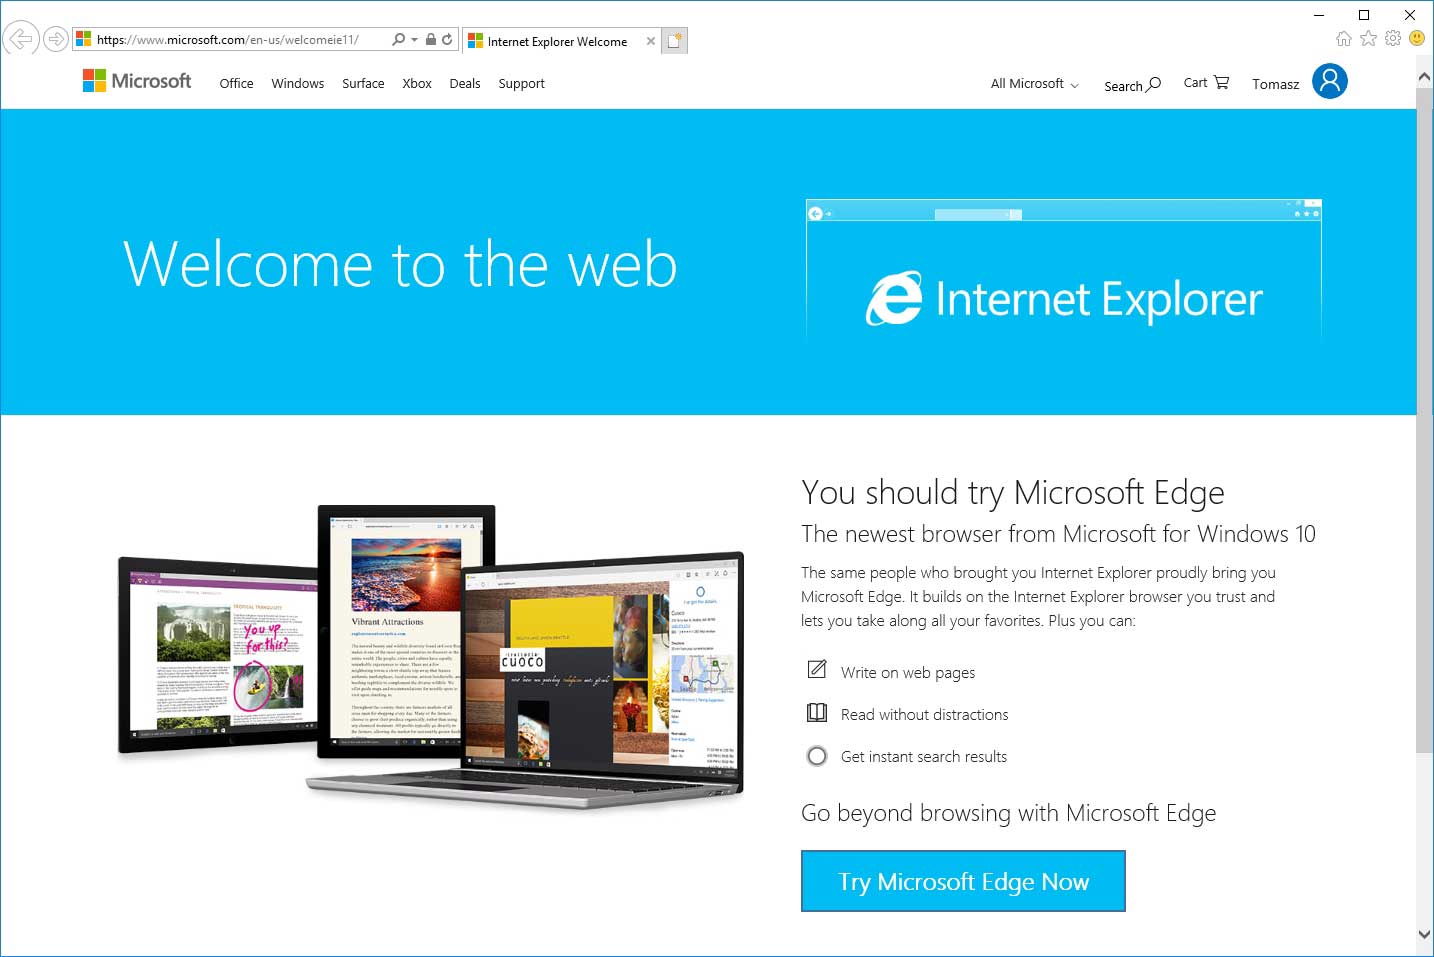 تحميل متصفح Internet Explorer للكمبيوتر